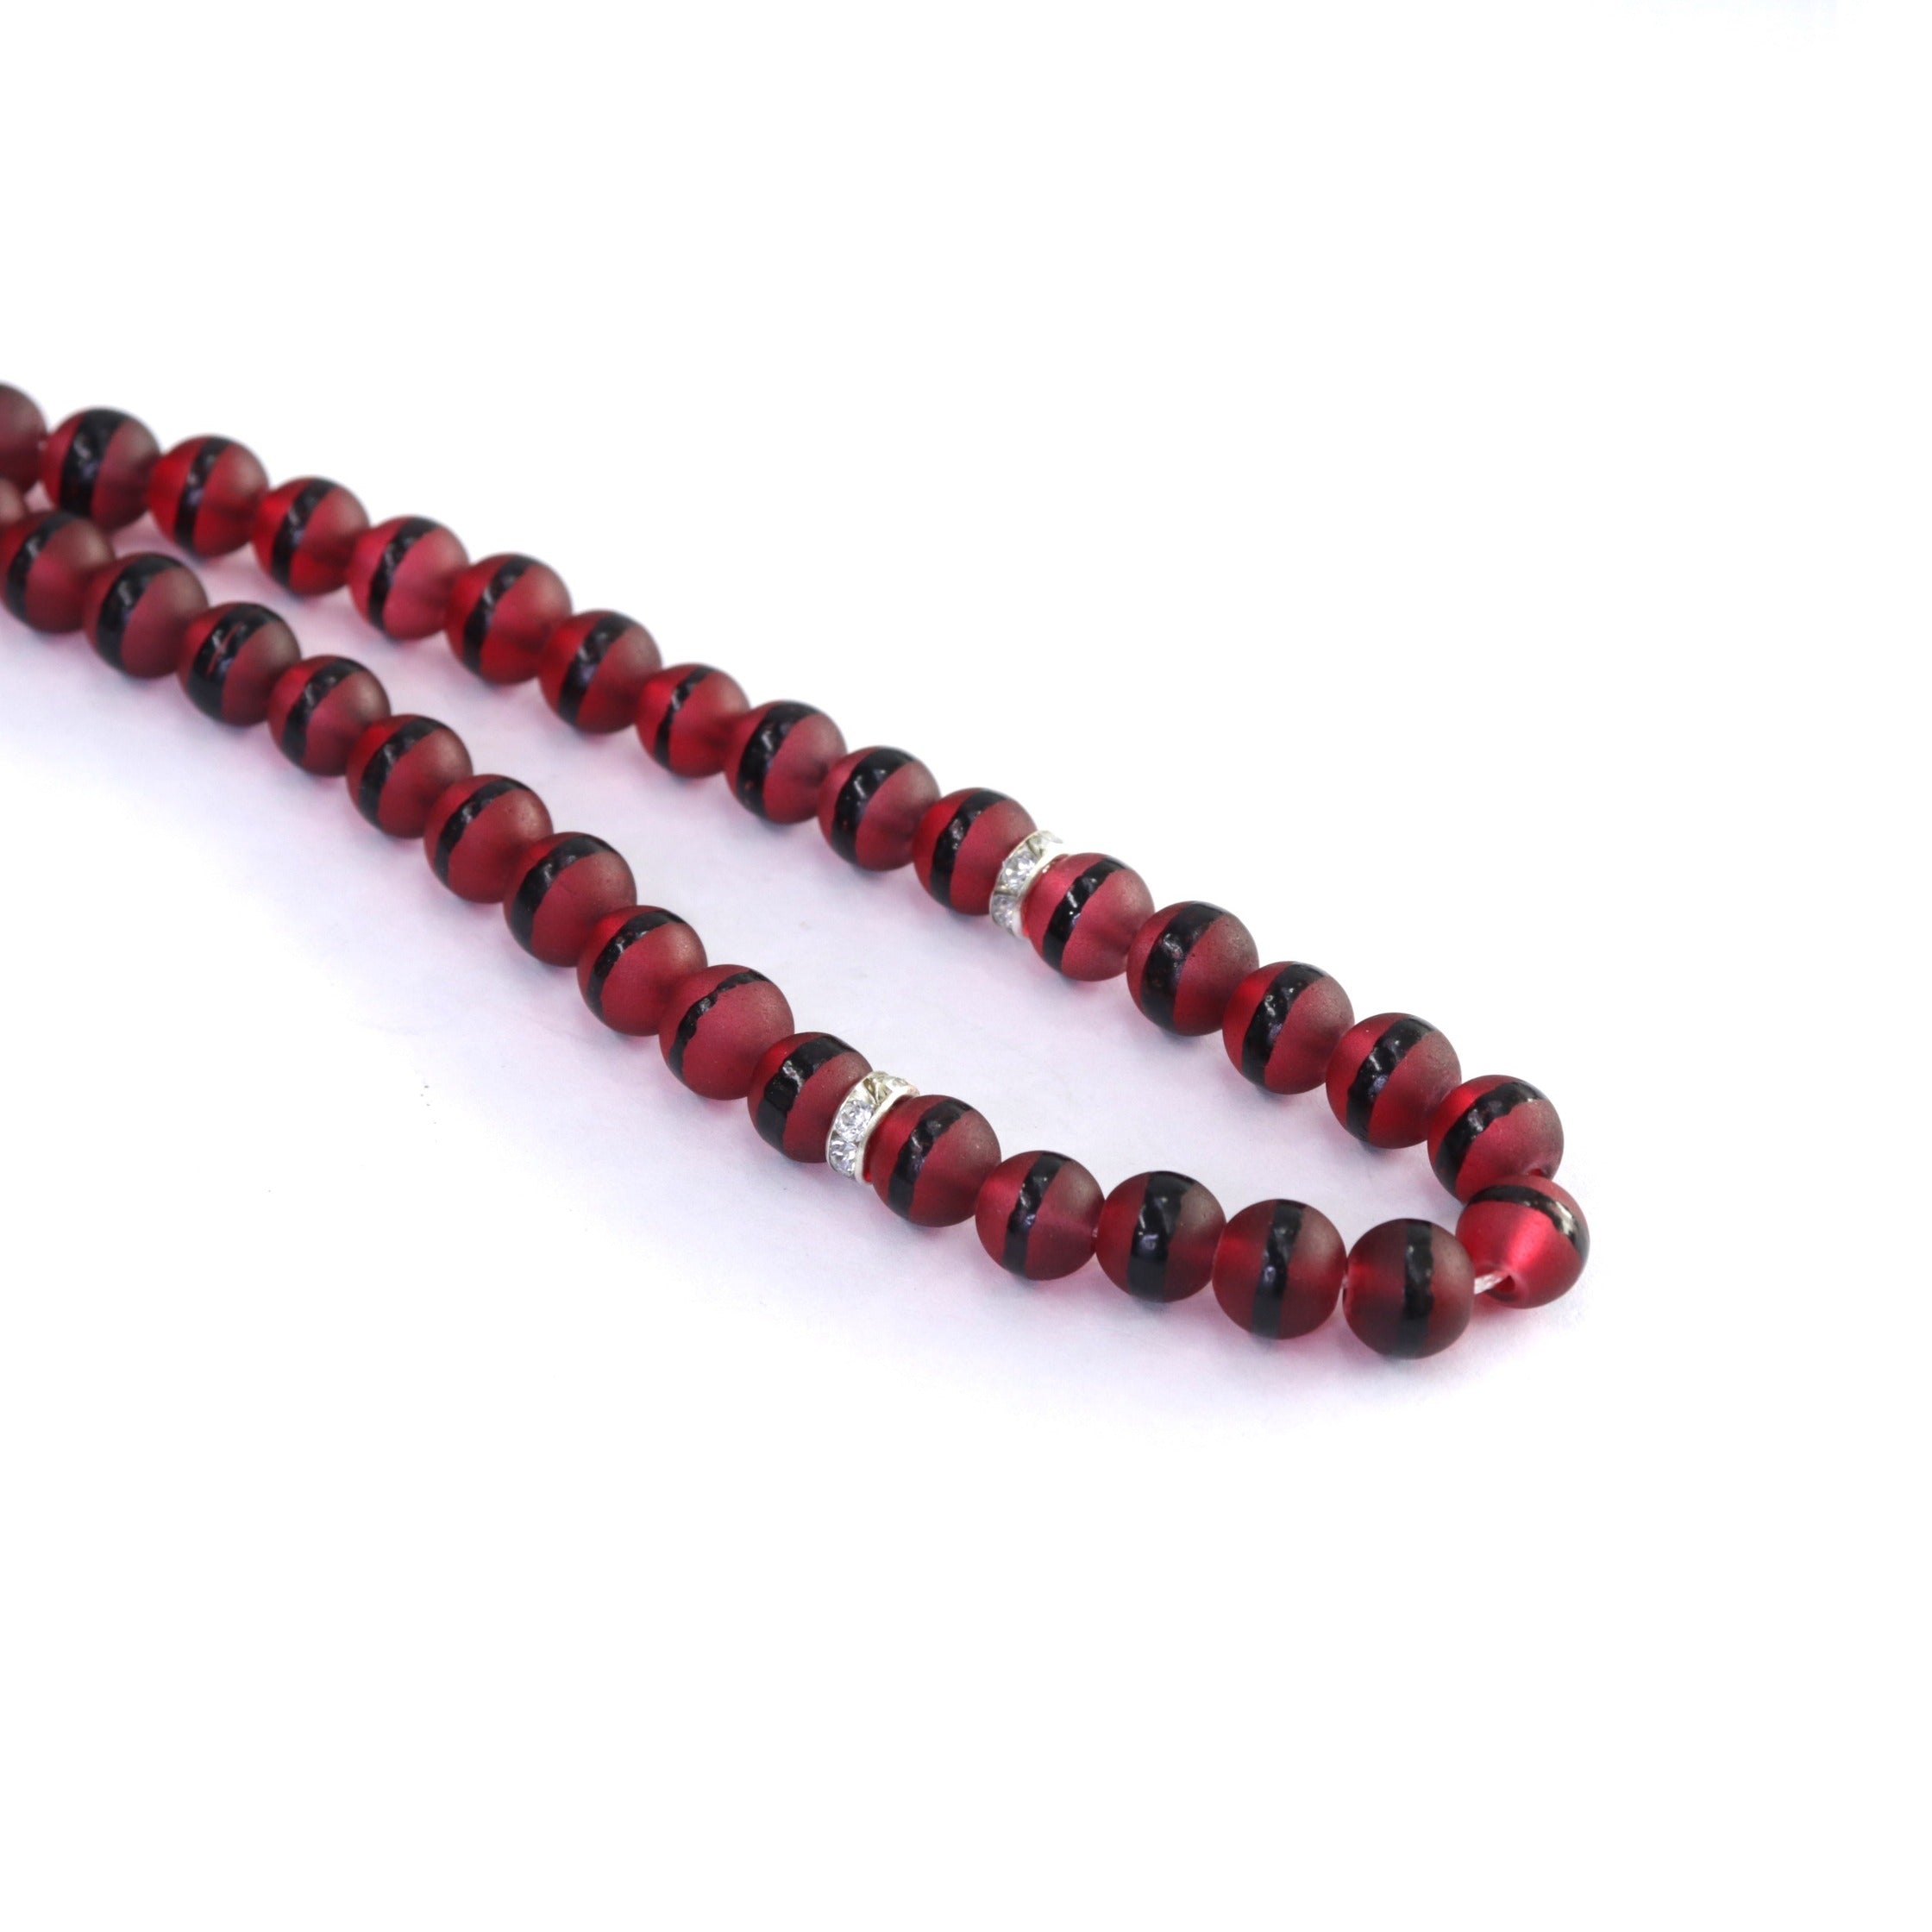 Mini Tasbeeh Rosary Prayer Beads With Black Line | 33 Beards